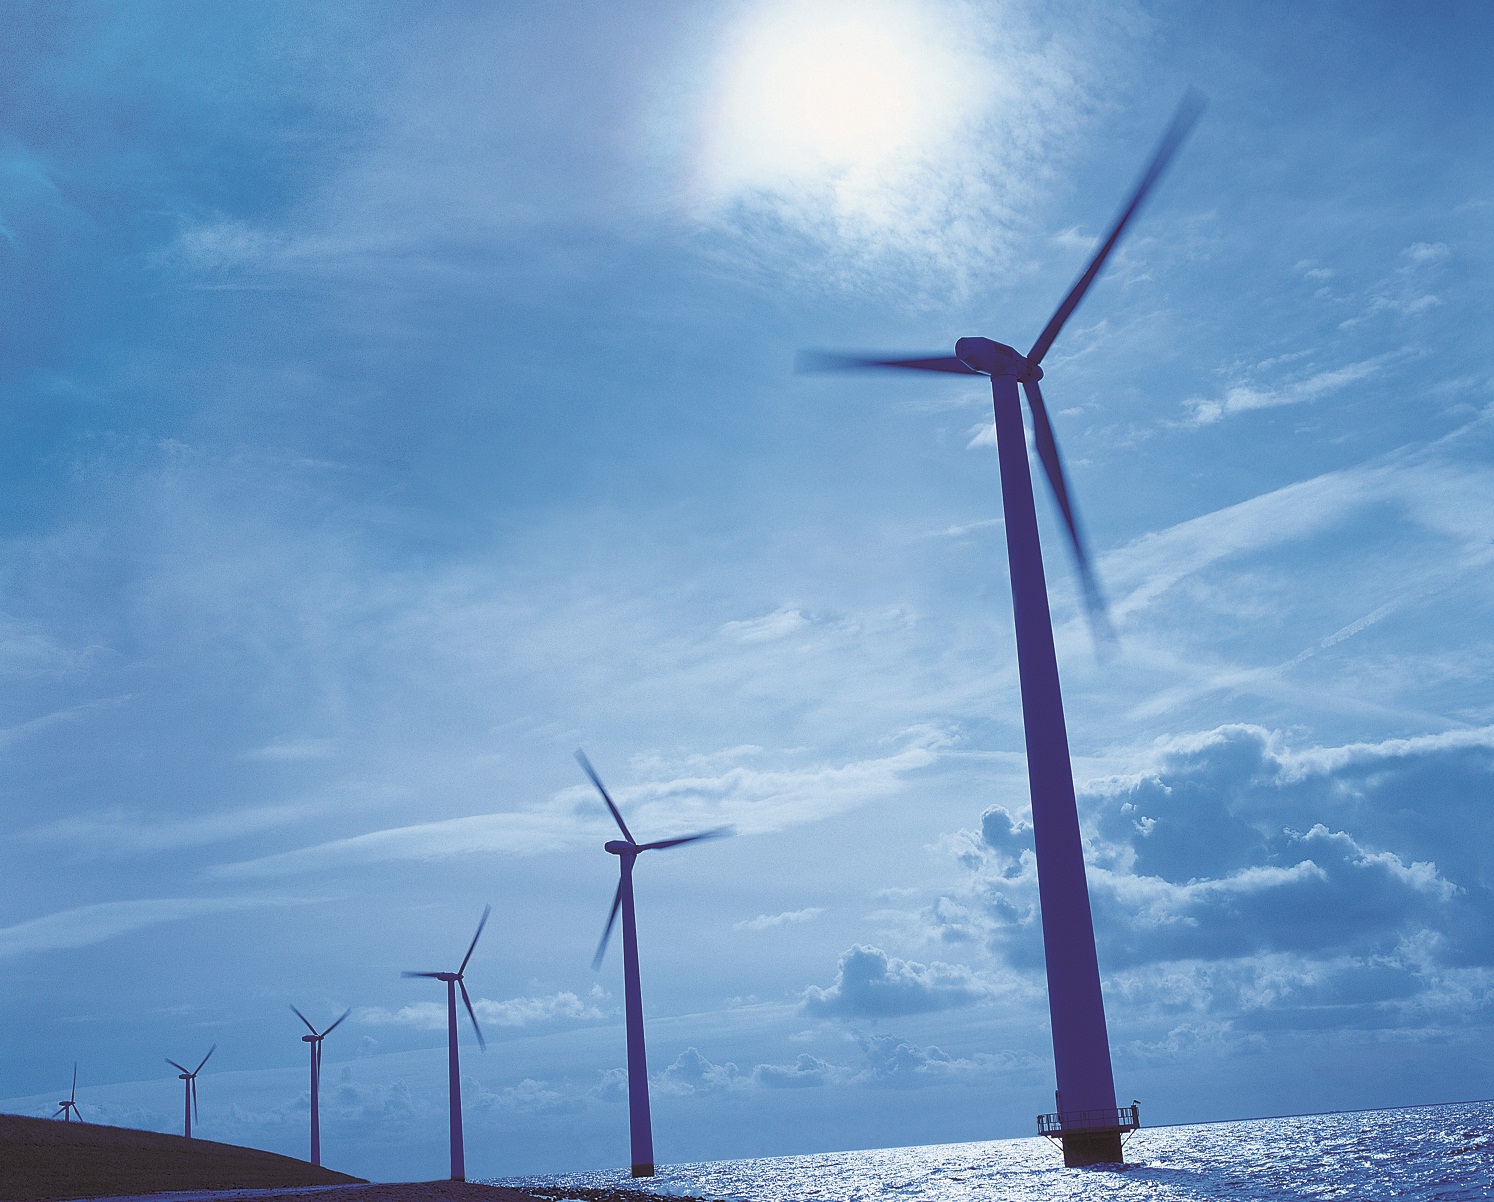 IEA Policy Uncertainty Threatens to Slow Renewable Energy Momentum